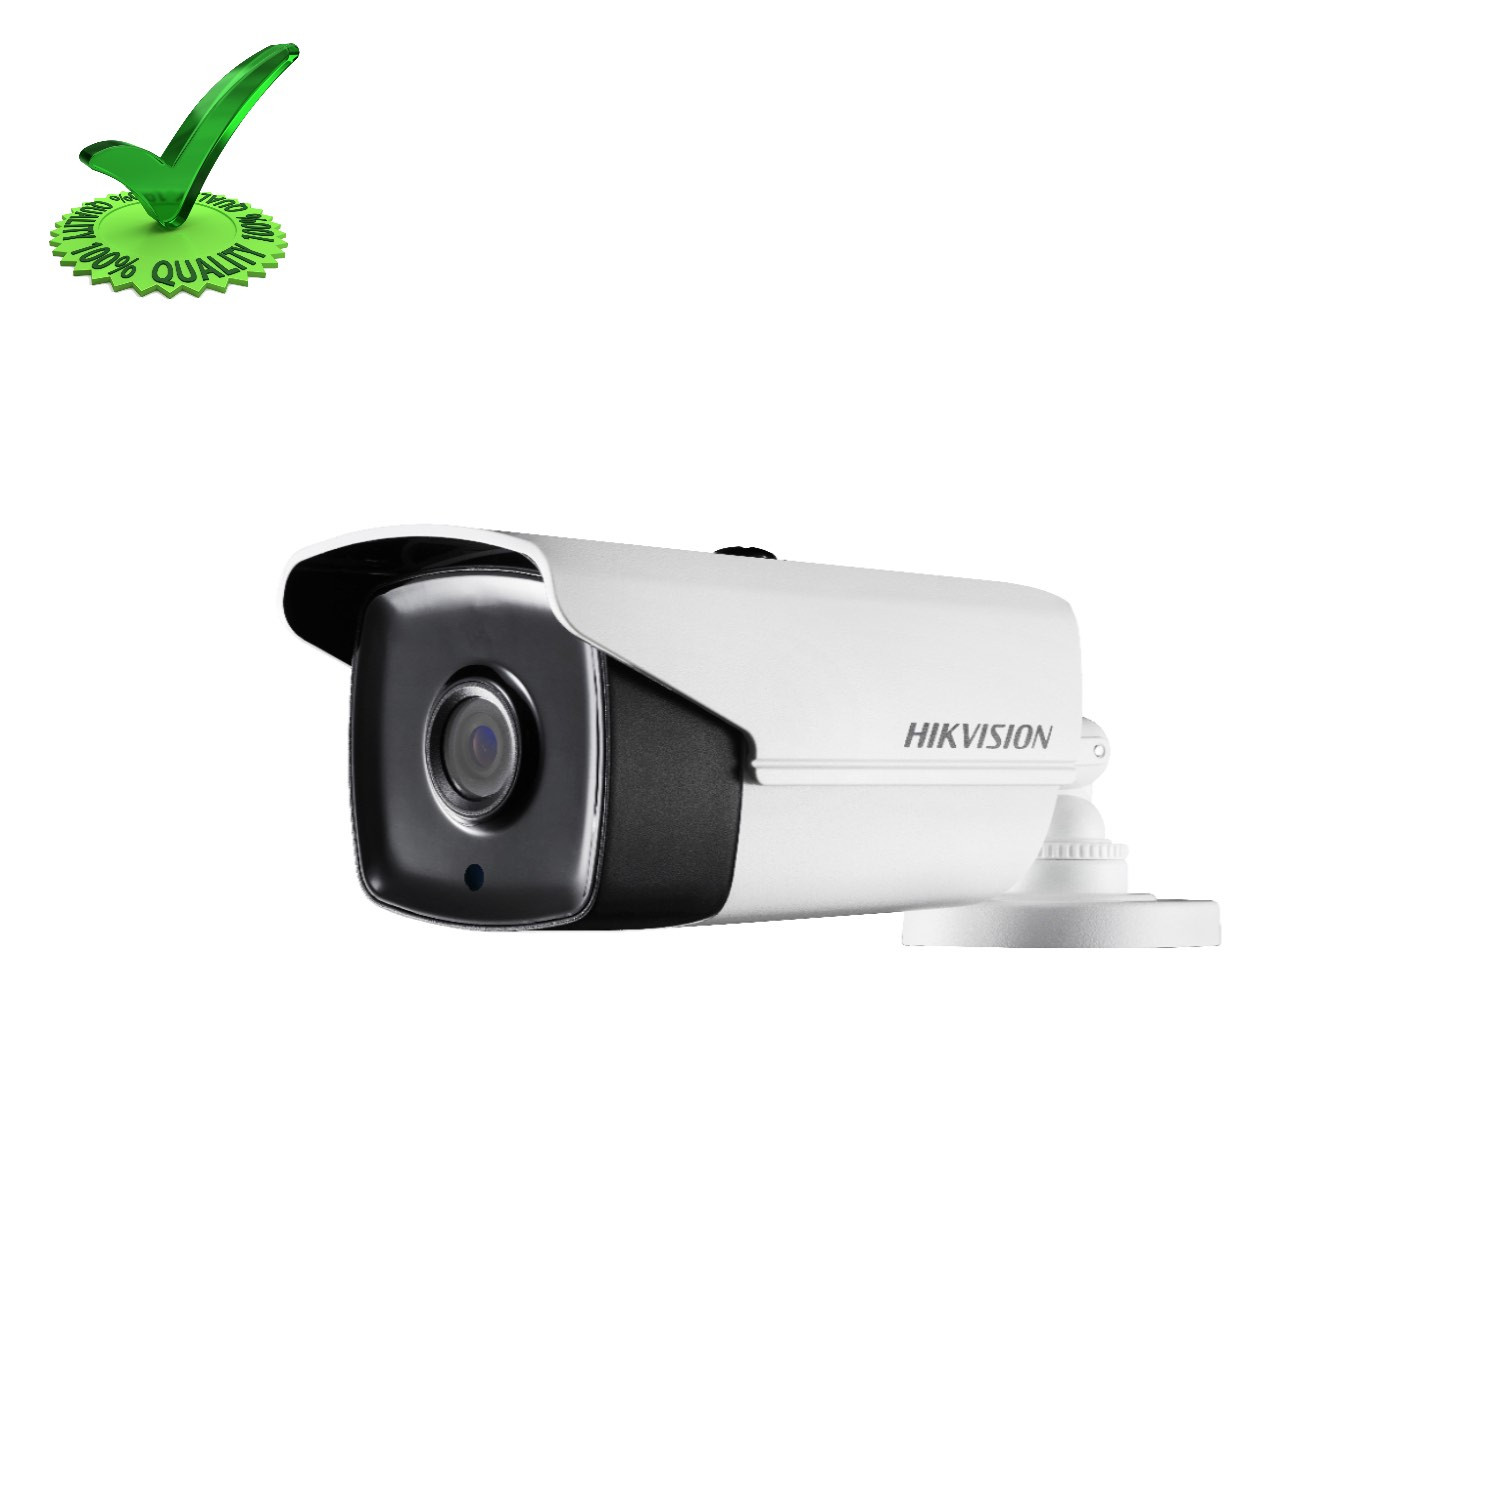 Hikvision DS-2CE1AH0T-IT1F 5MP HD Plastic Body Bullet Camera